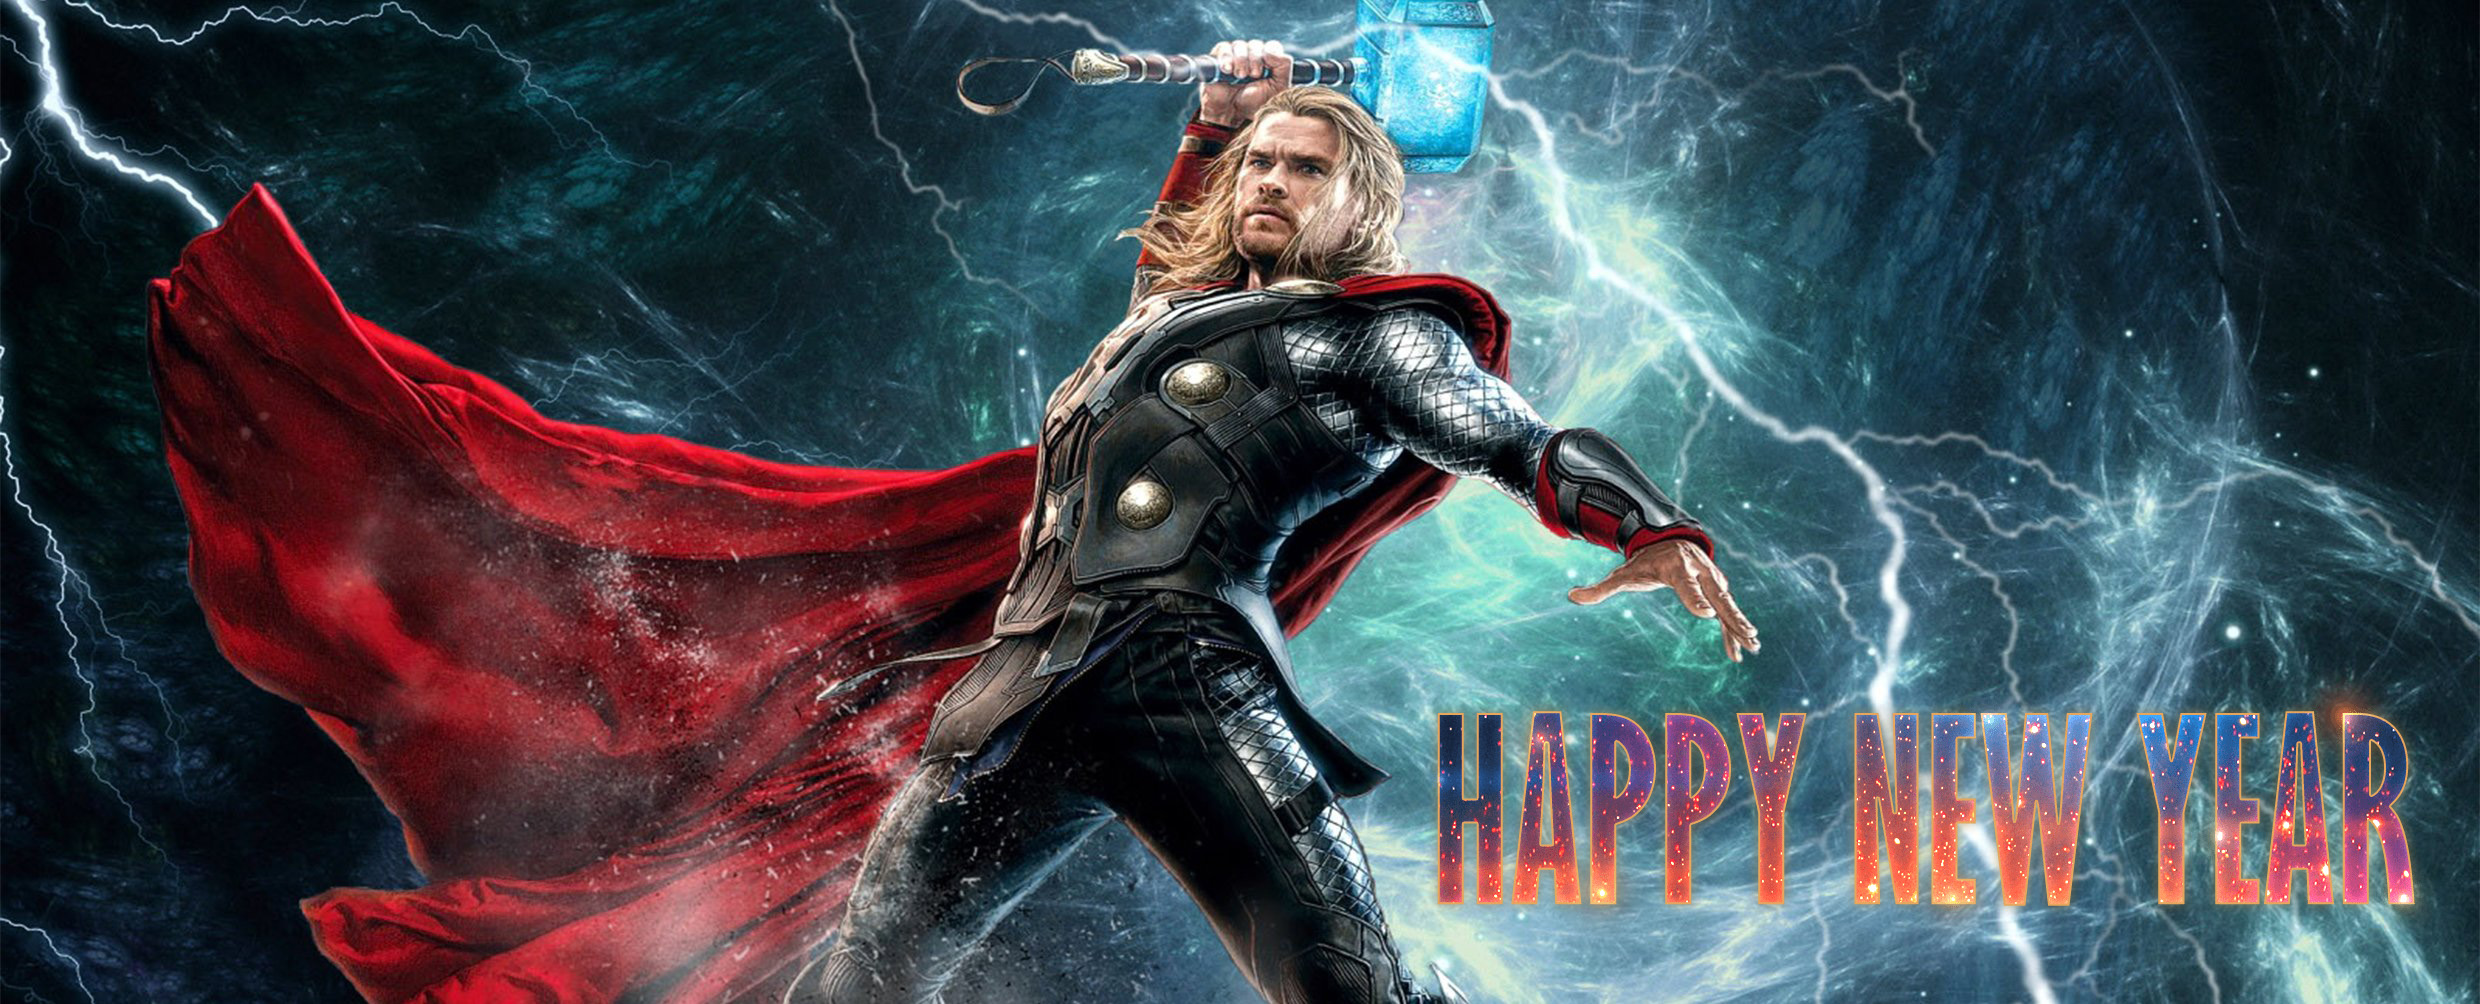 Happy New Year Wishes Super Hero Thor Kids Hd Wallpaper - HD Wallpaper 